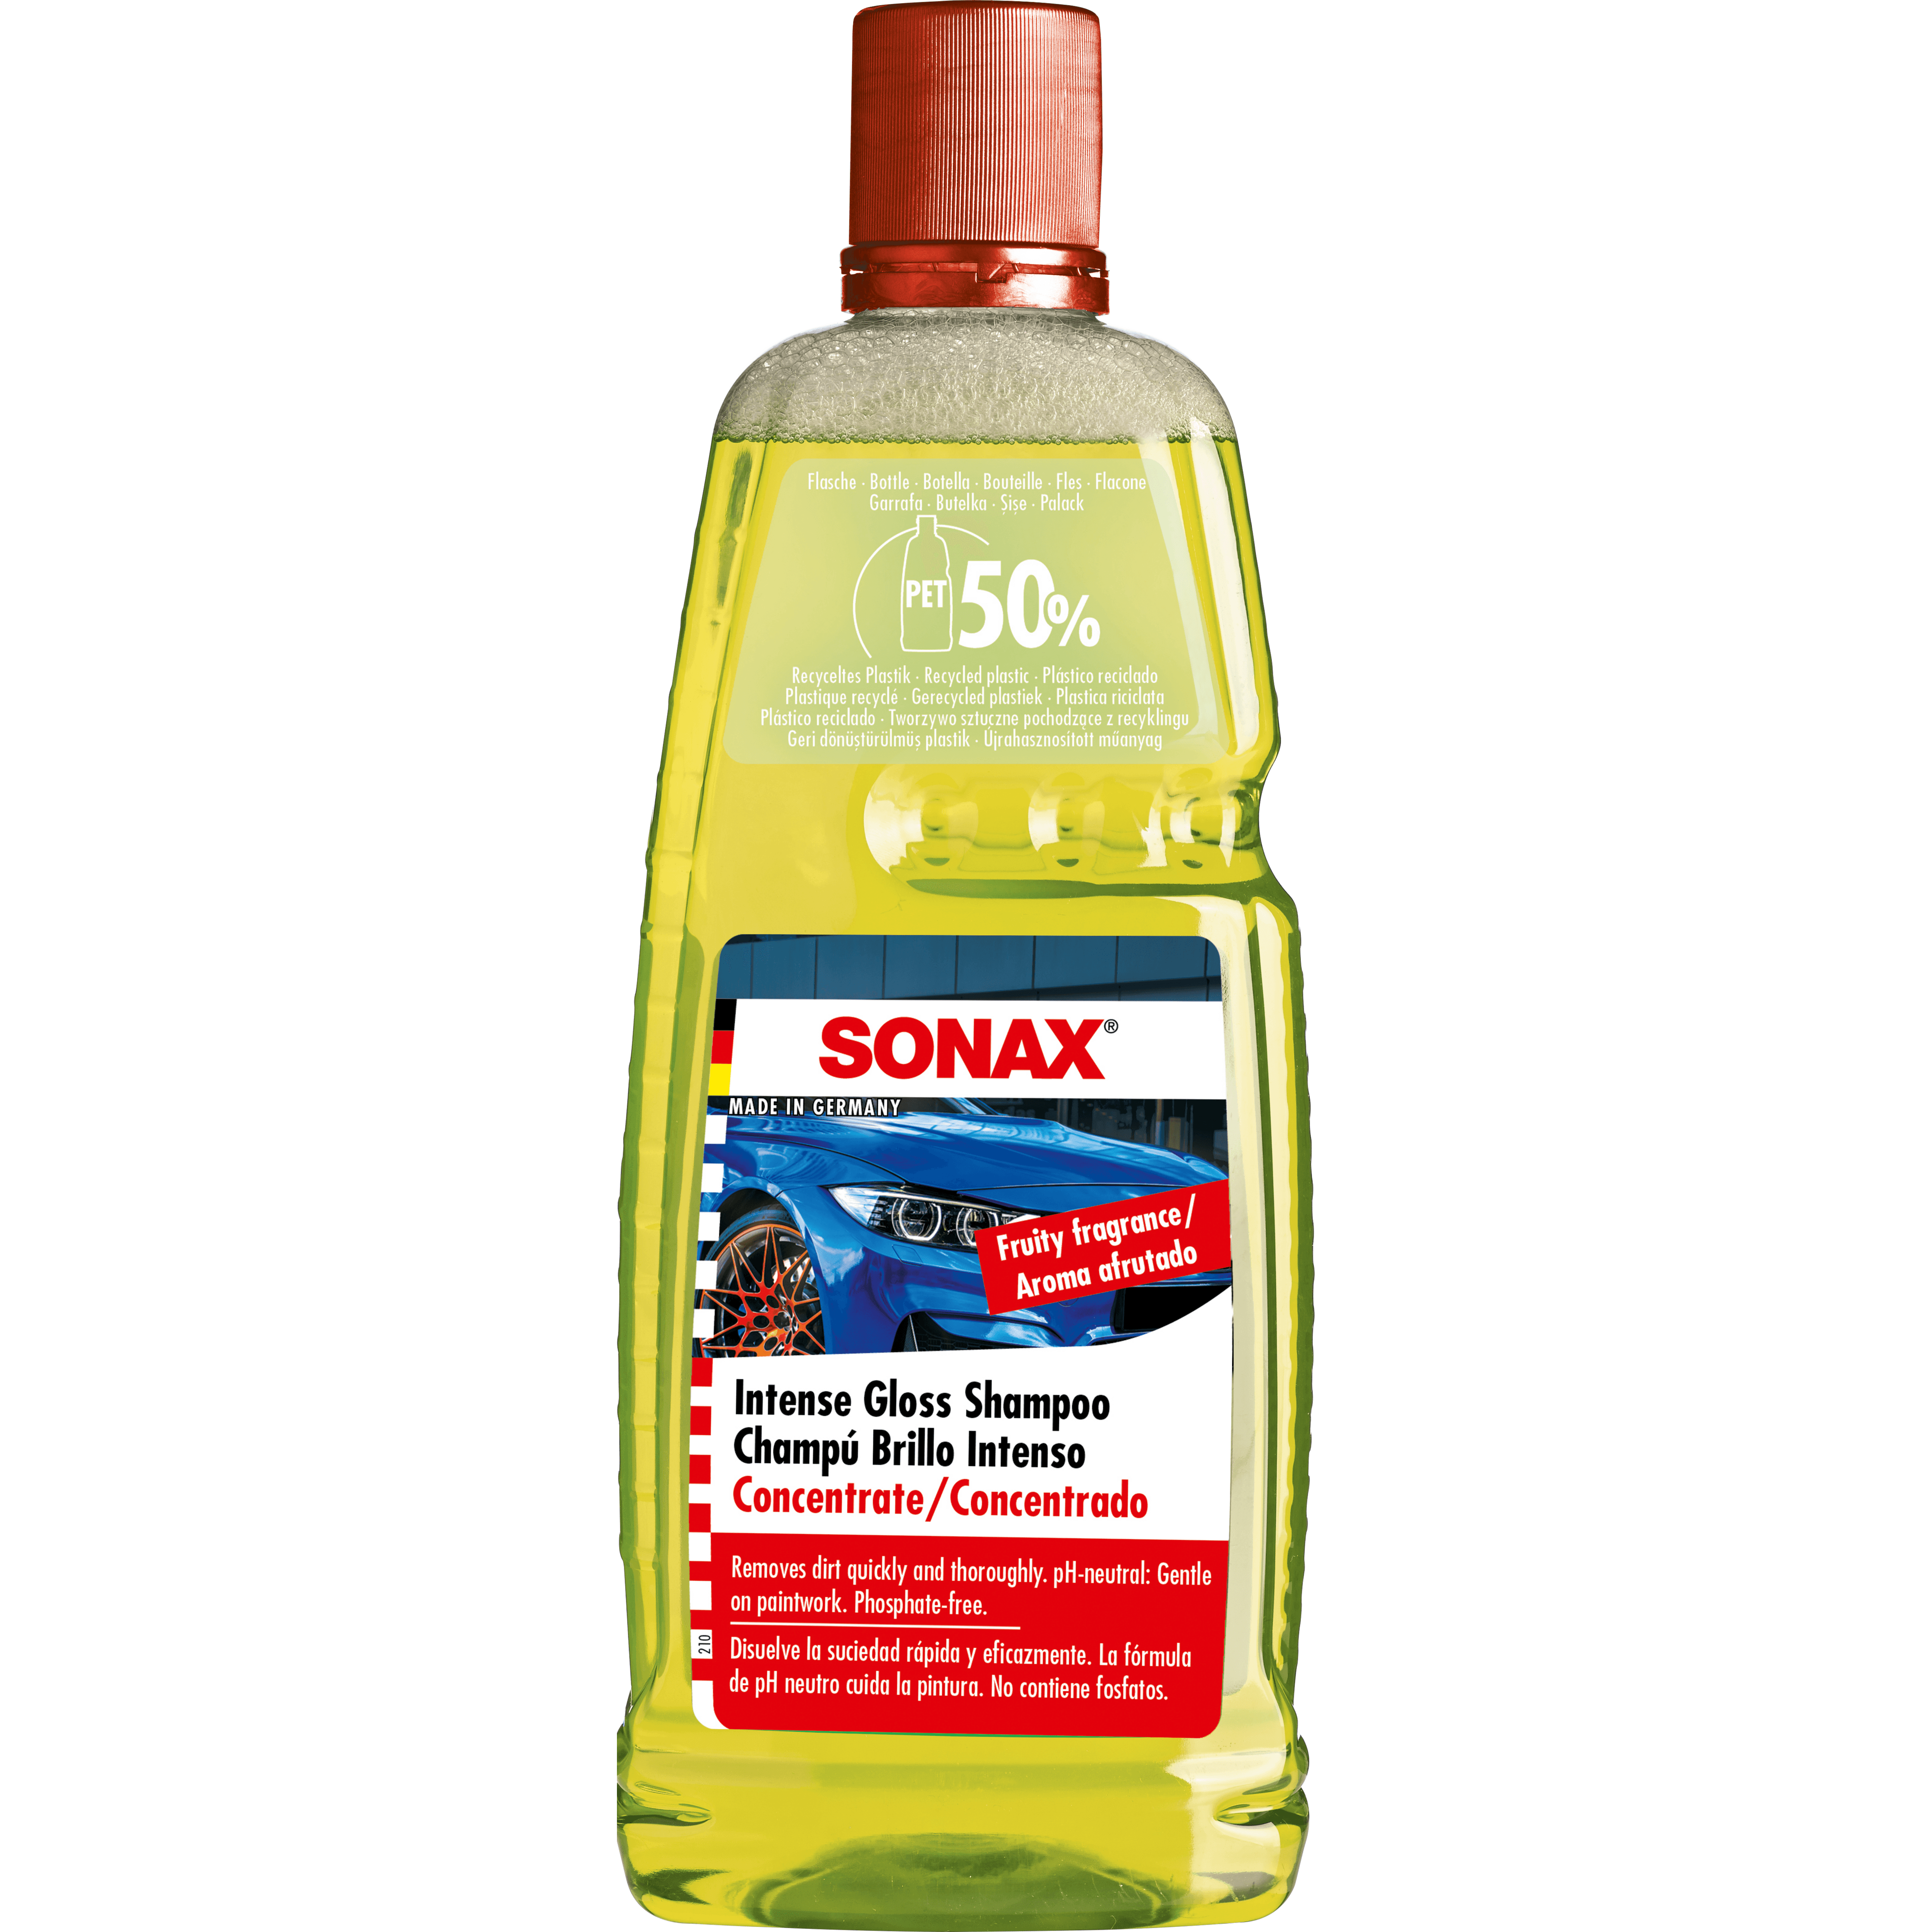 SONAX Intense Gloss Shampoo 1L thumbnail